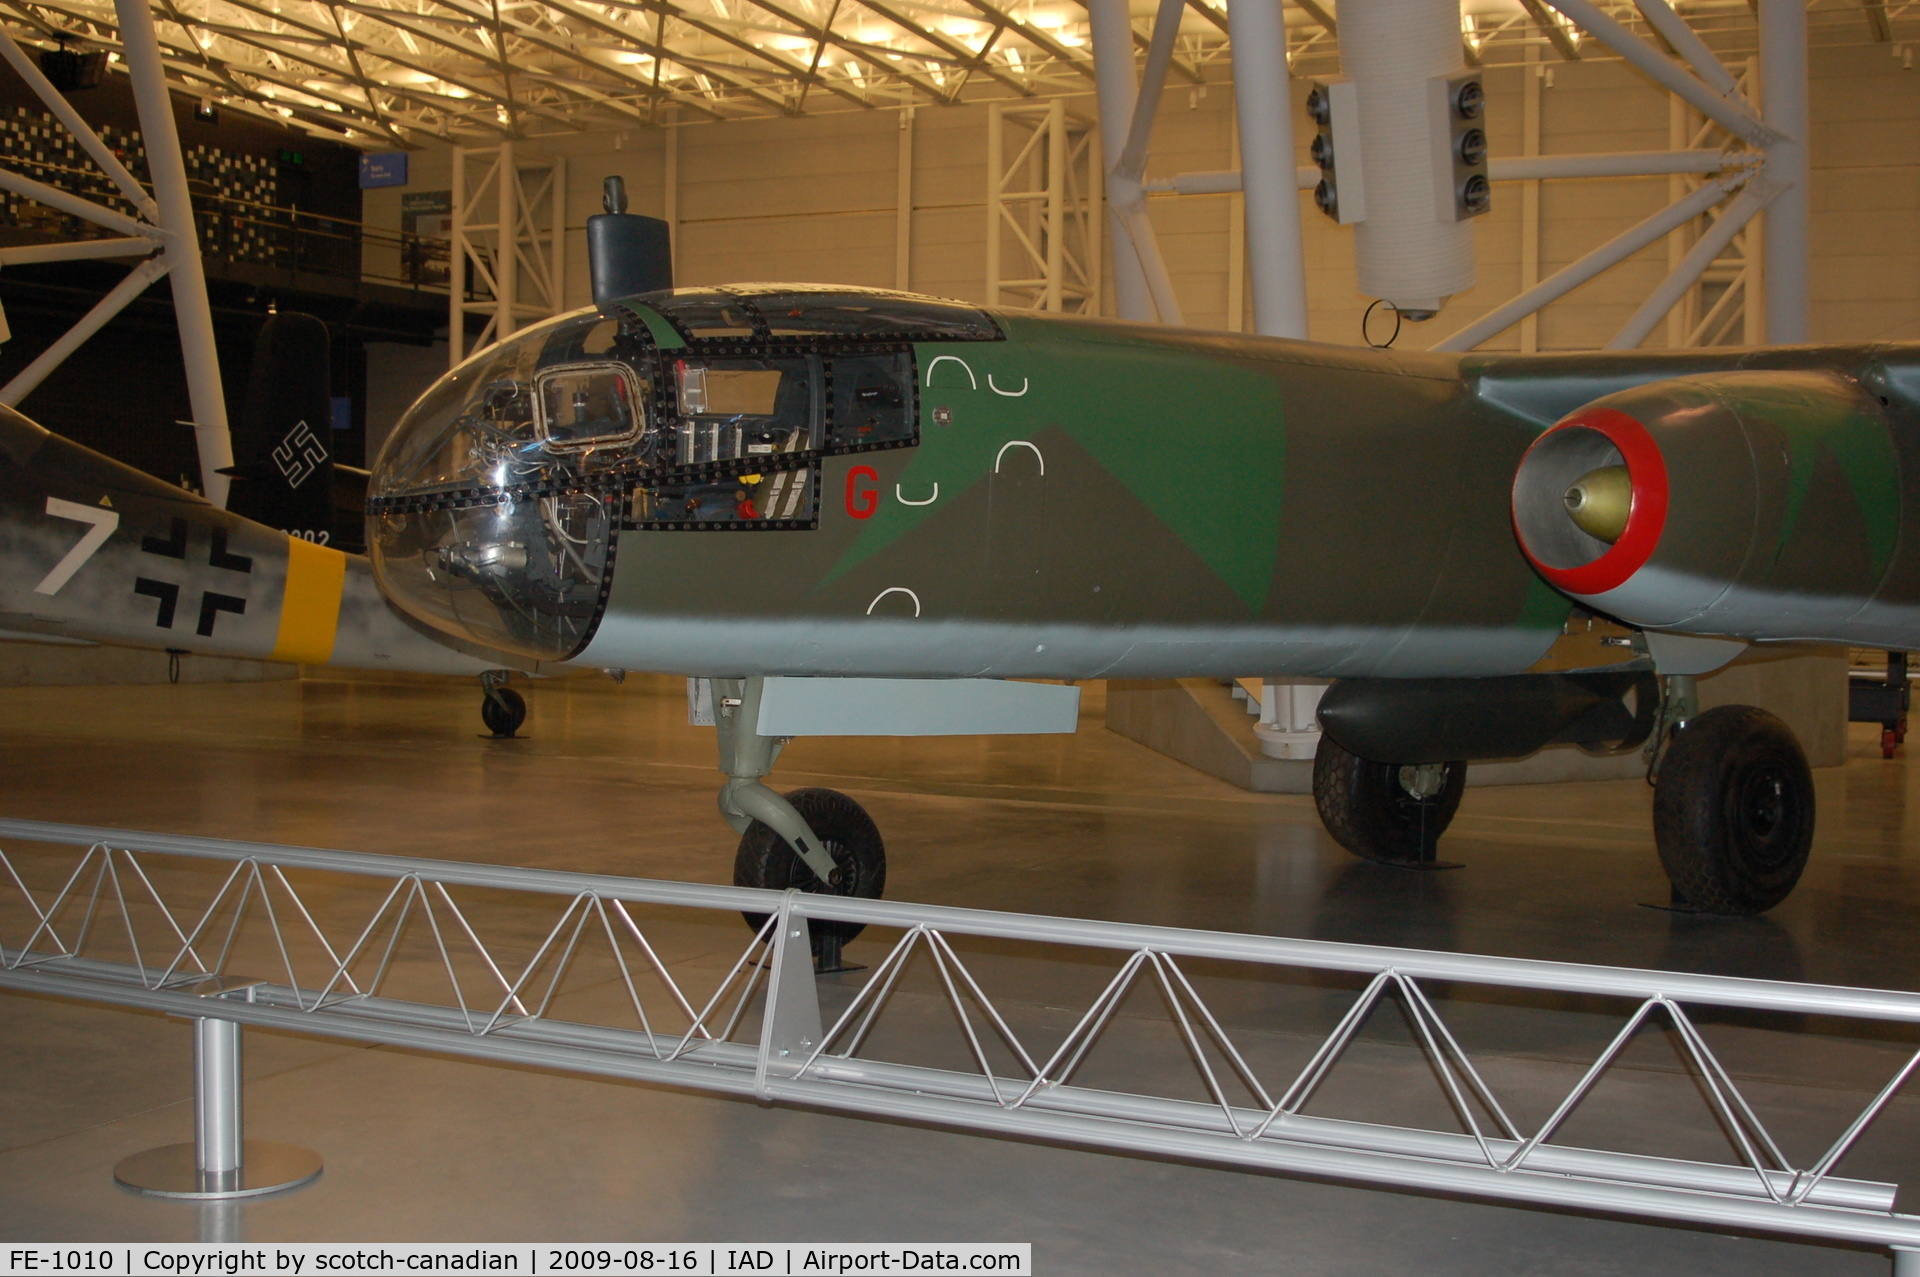 FE-1010, 1944 Arado Ar-234B-2 Blitz C/N 140312, Arado Ar 234 B-2 Blitz (Lightning) at the Steven F. Udvar-Hazy Center, Smithsonian National Air and Space Museum, Chantilly, VA